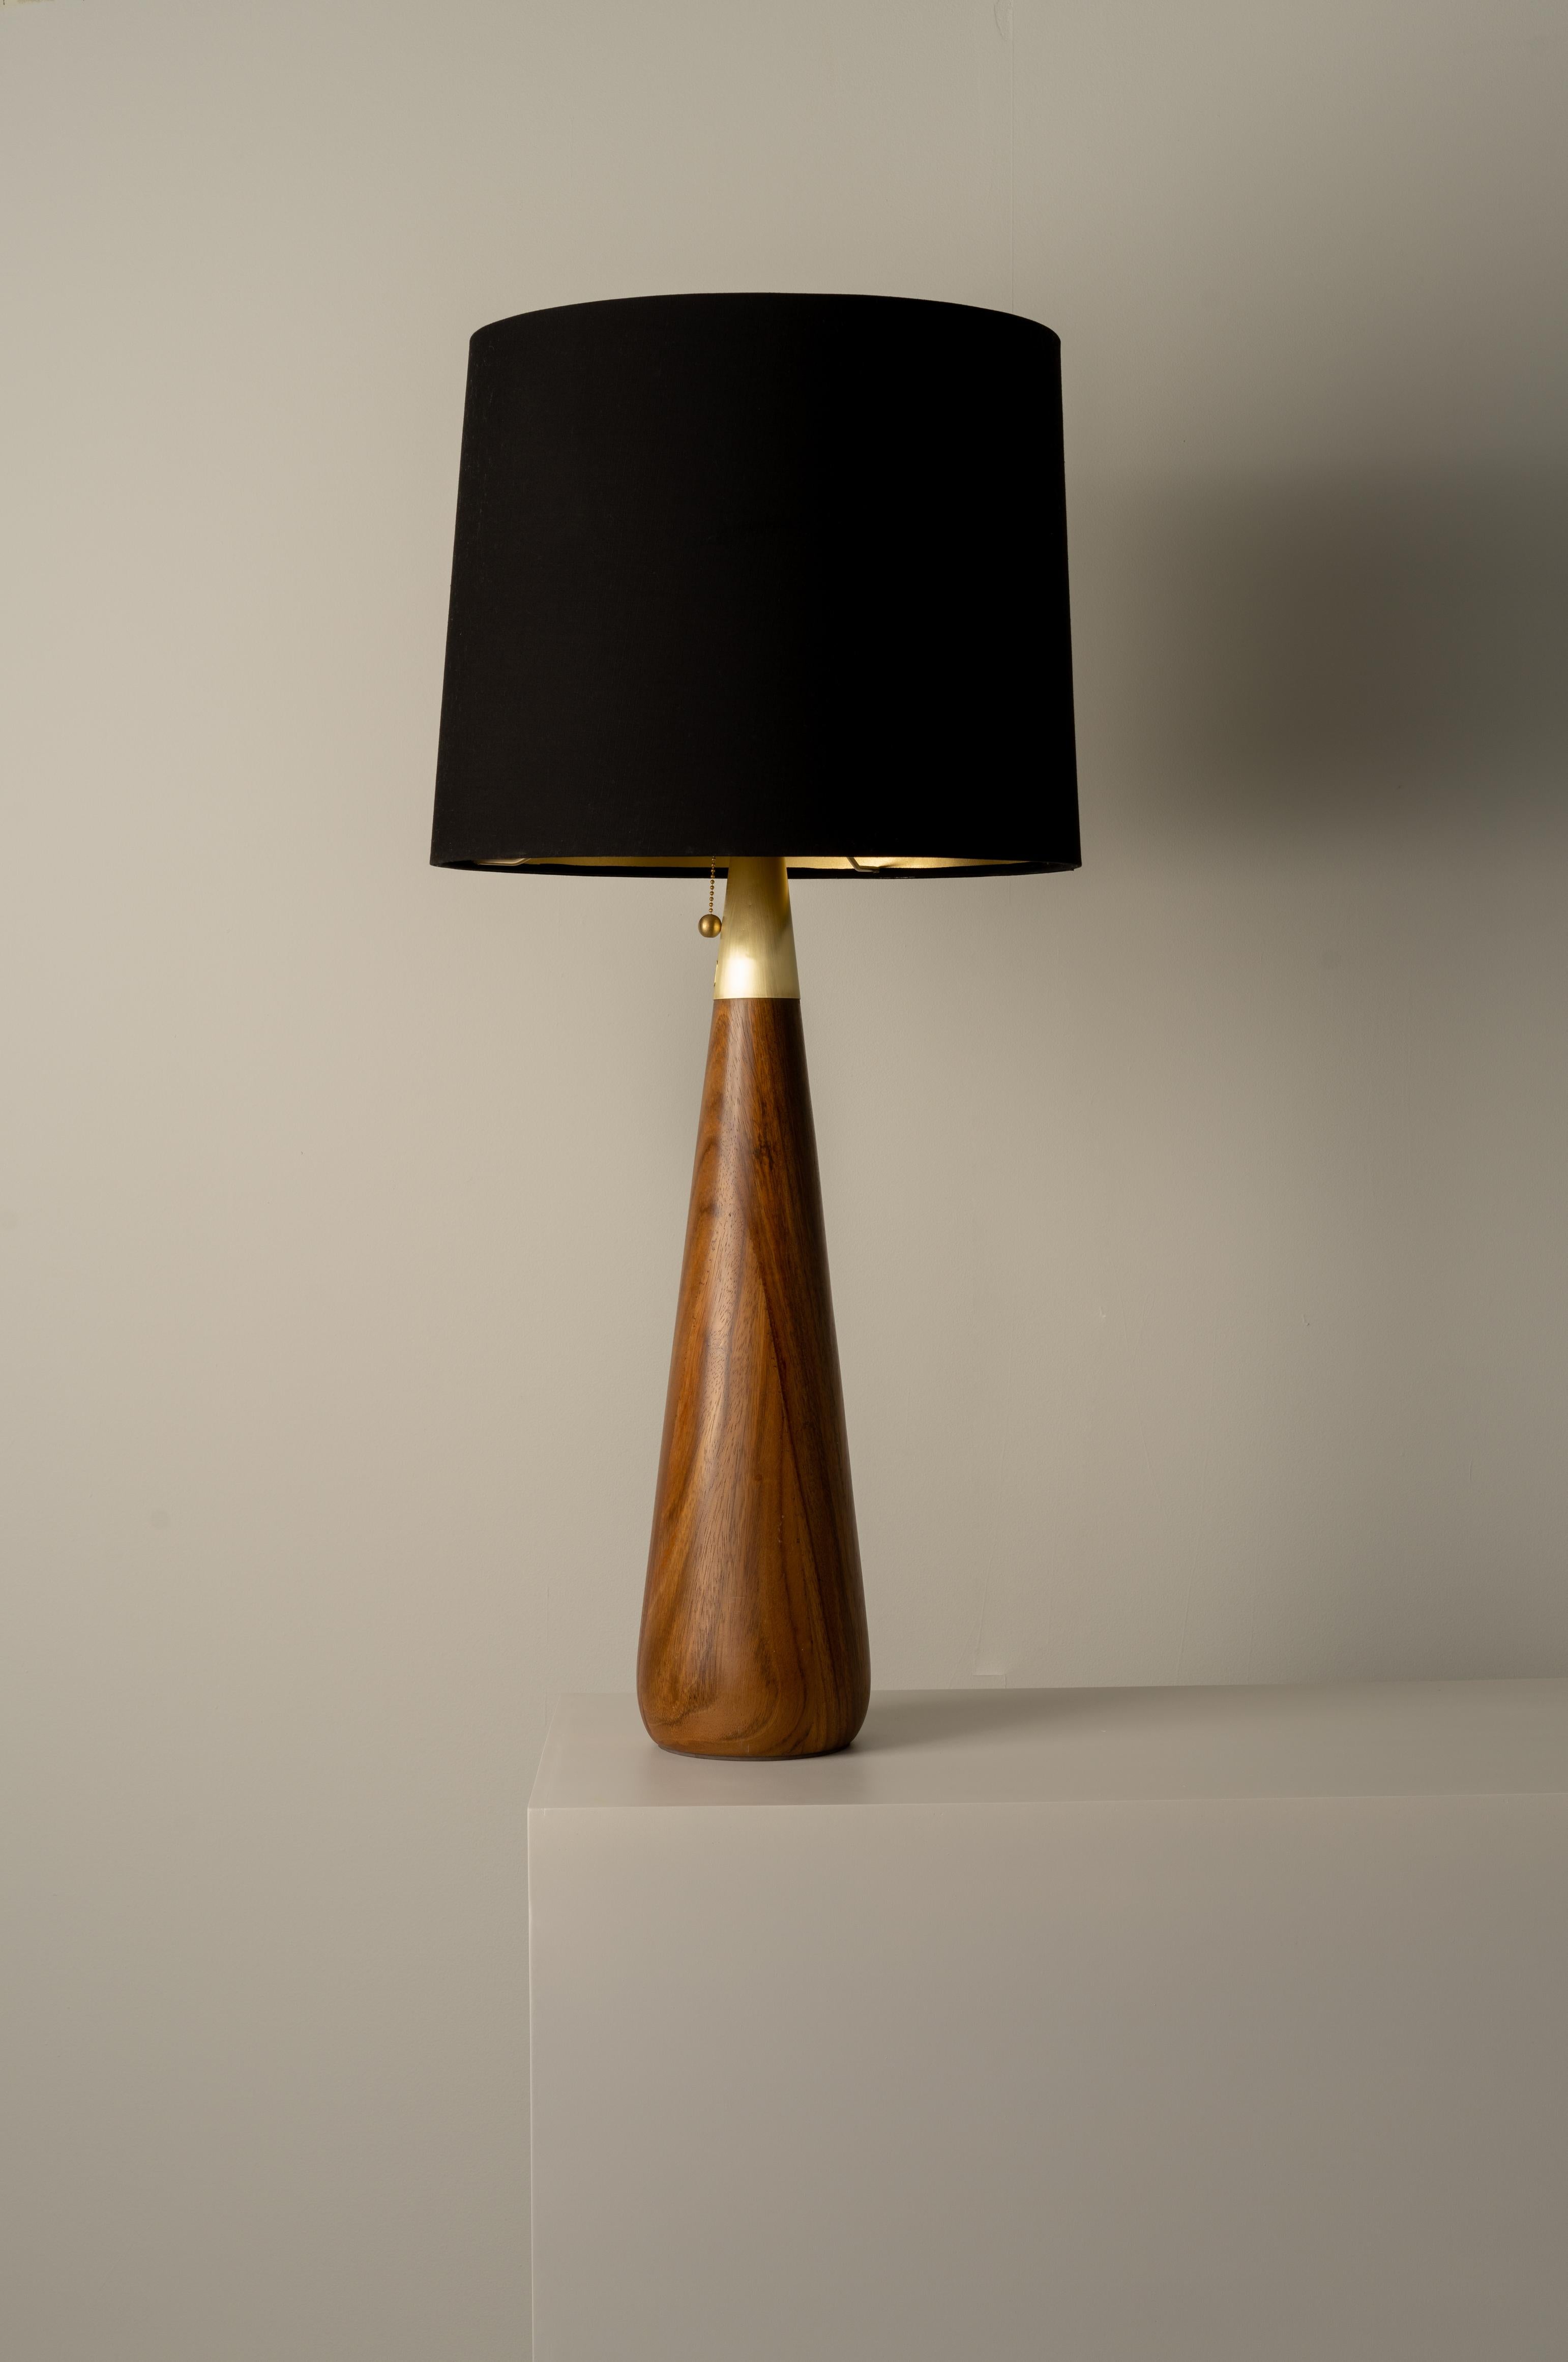 Mexican Organic Modern Table Lamp Natural Parota Wood Fiberglass Shade For Sale